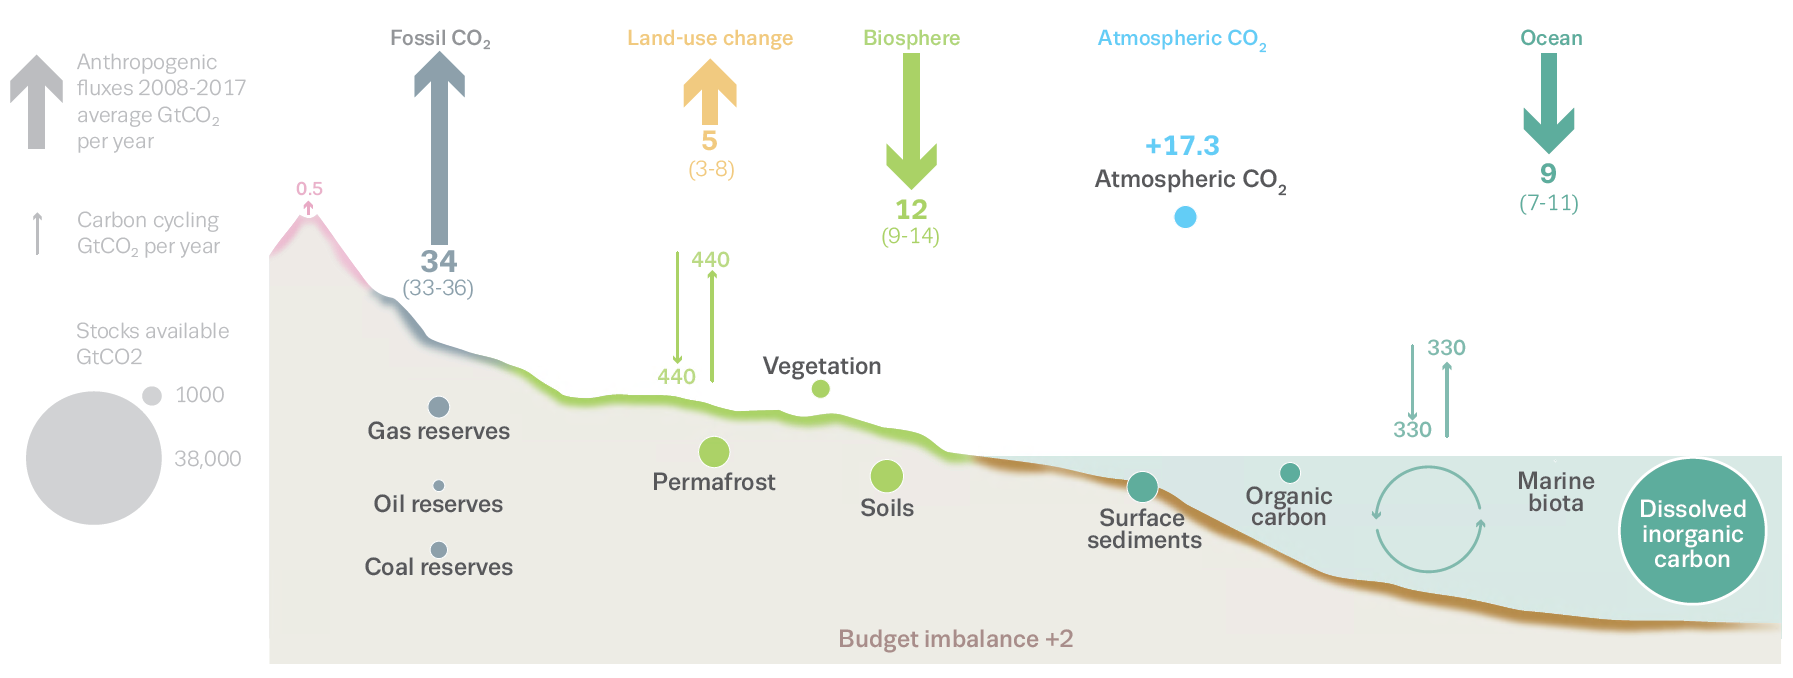 CO2 global anthropogenic perturbation flux